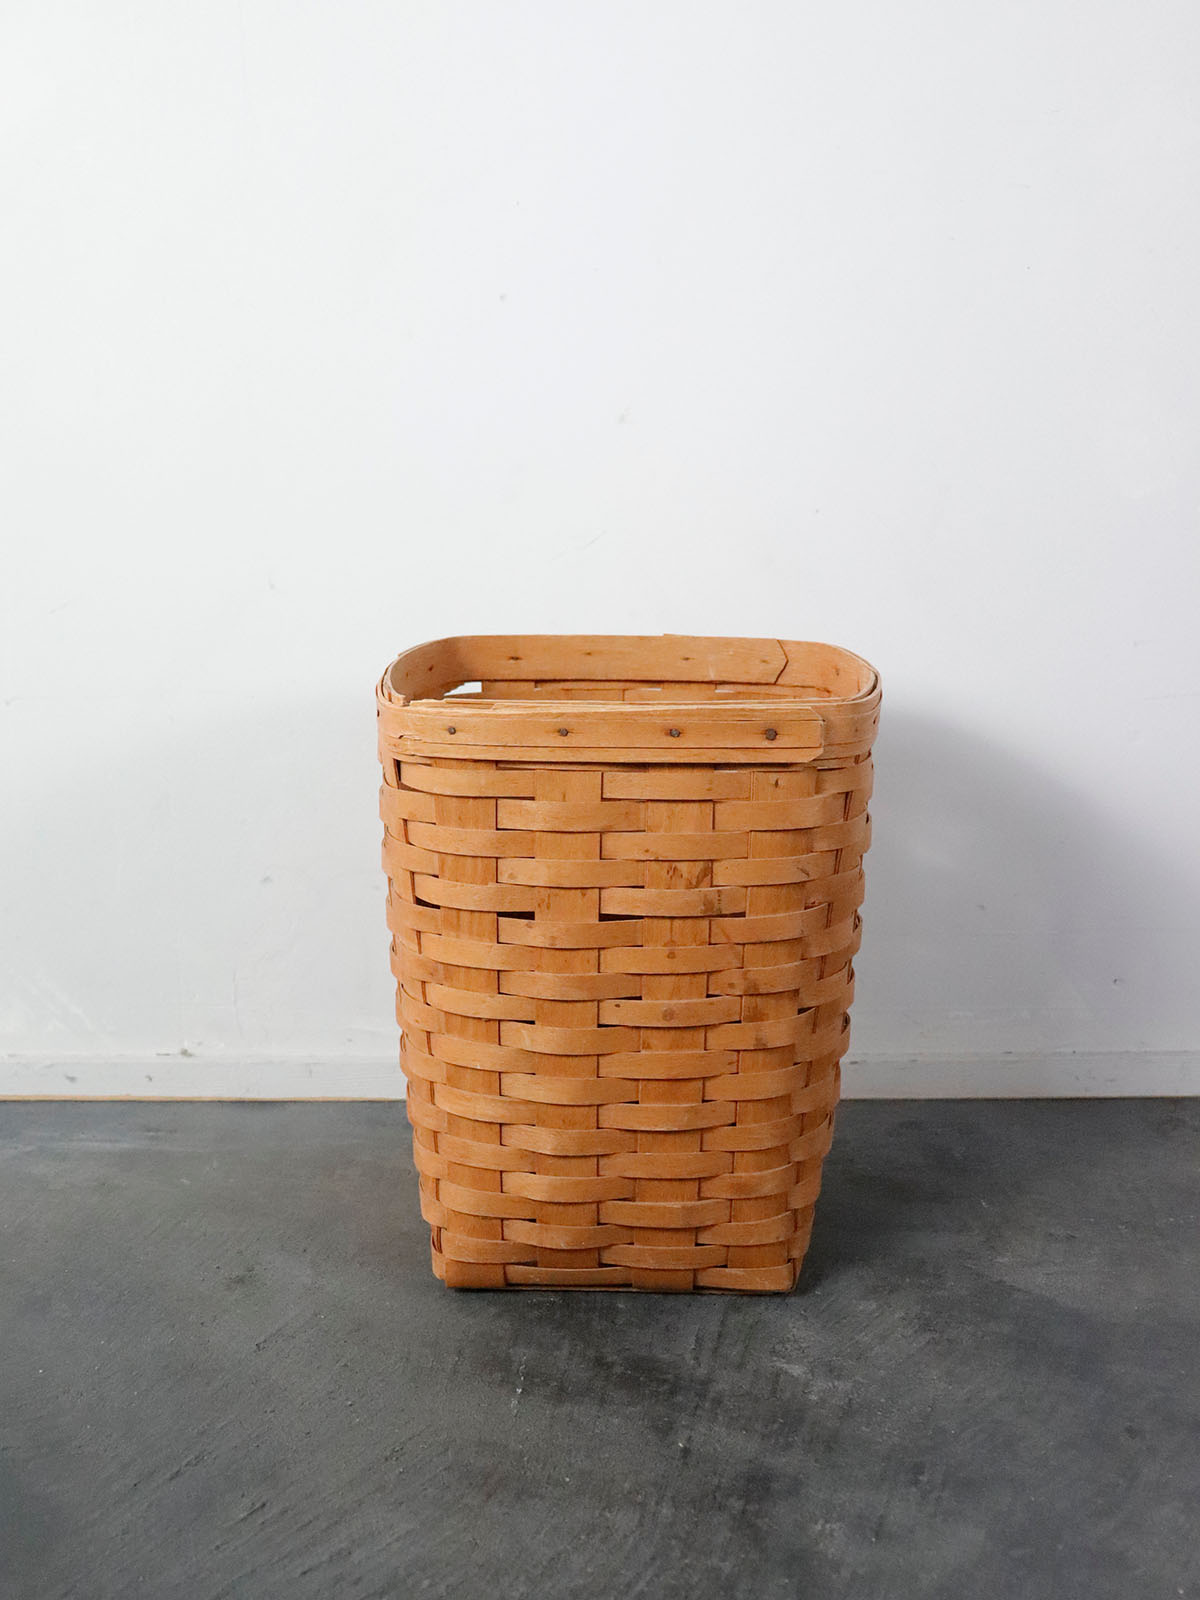 longaberger baskets company,USA,vintage,wood basket,handmade